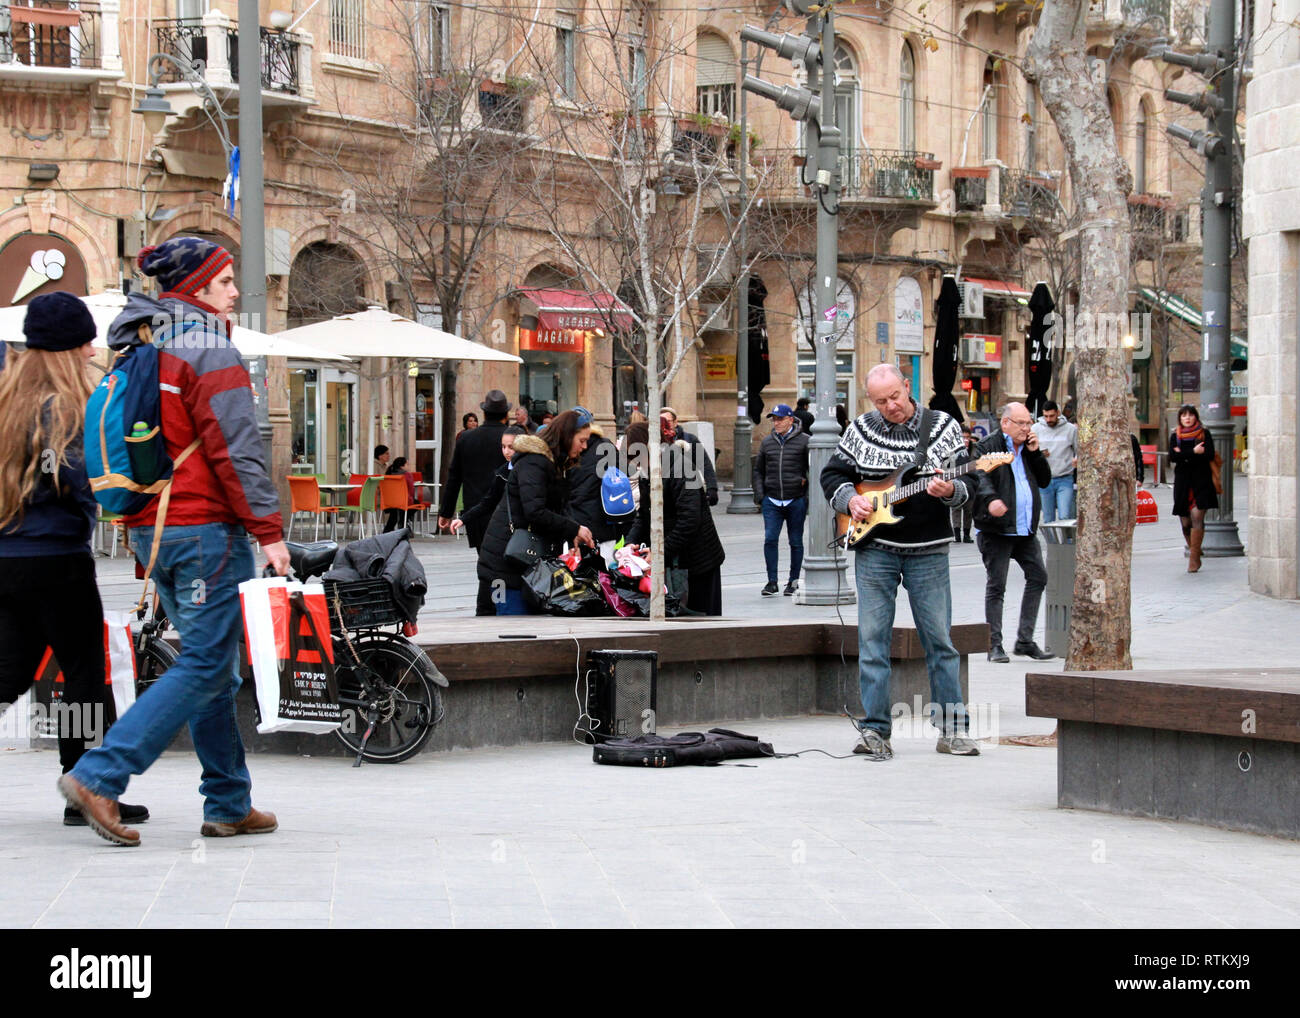 A street musician performs among many pedestrians on Ben Yehudah in Jerusalem. Stock Photo